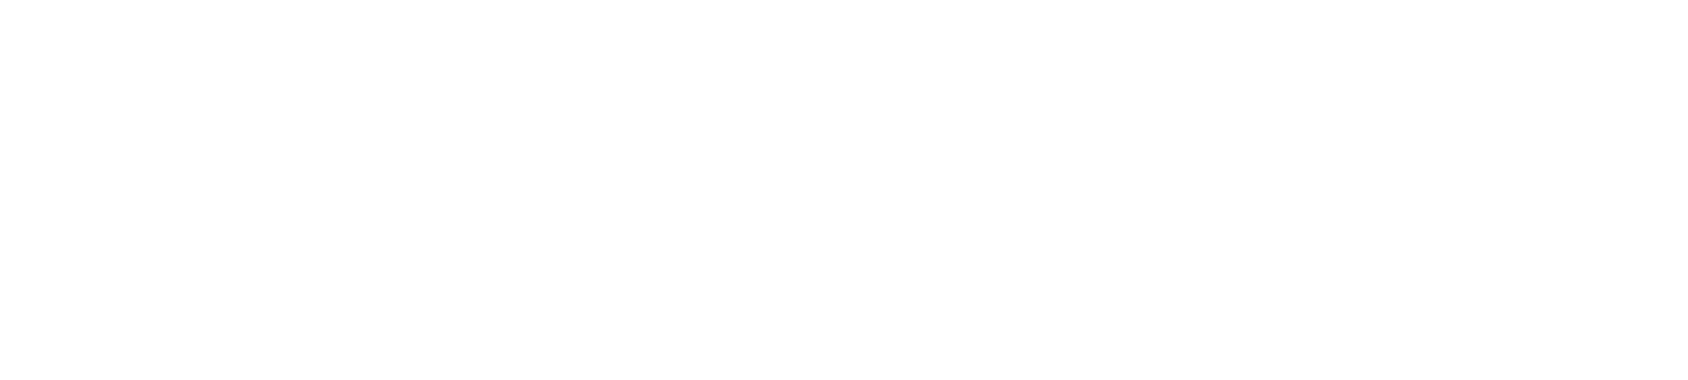 Coupang logo large for dark backgrounds (transparent PNG)